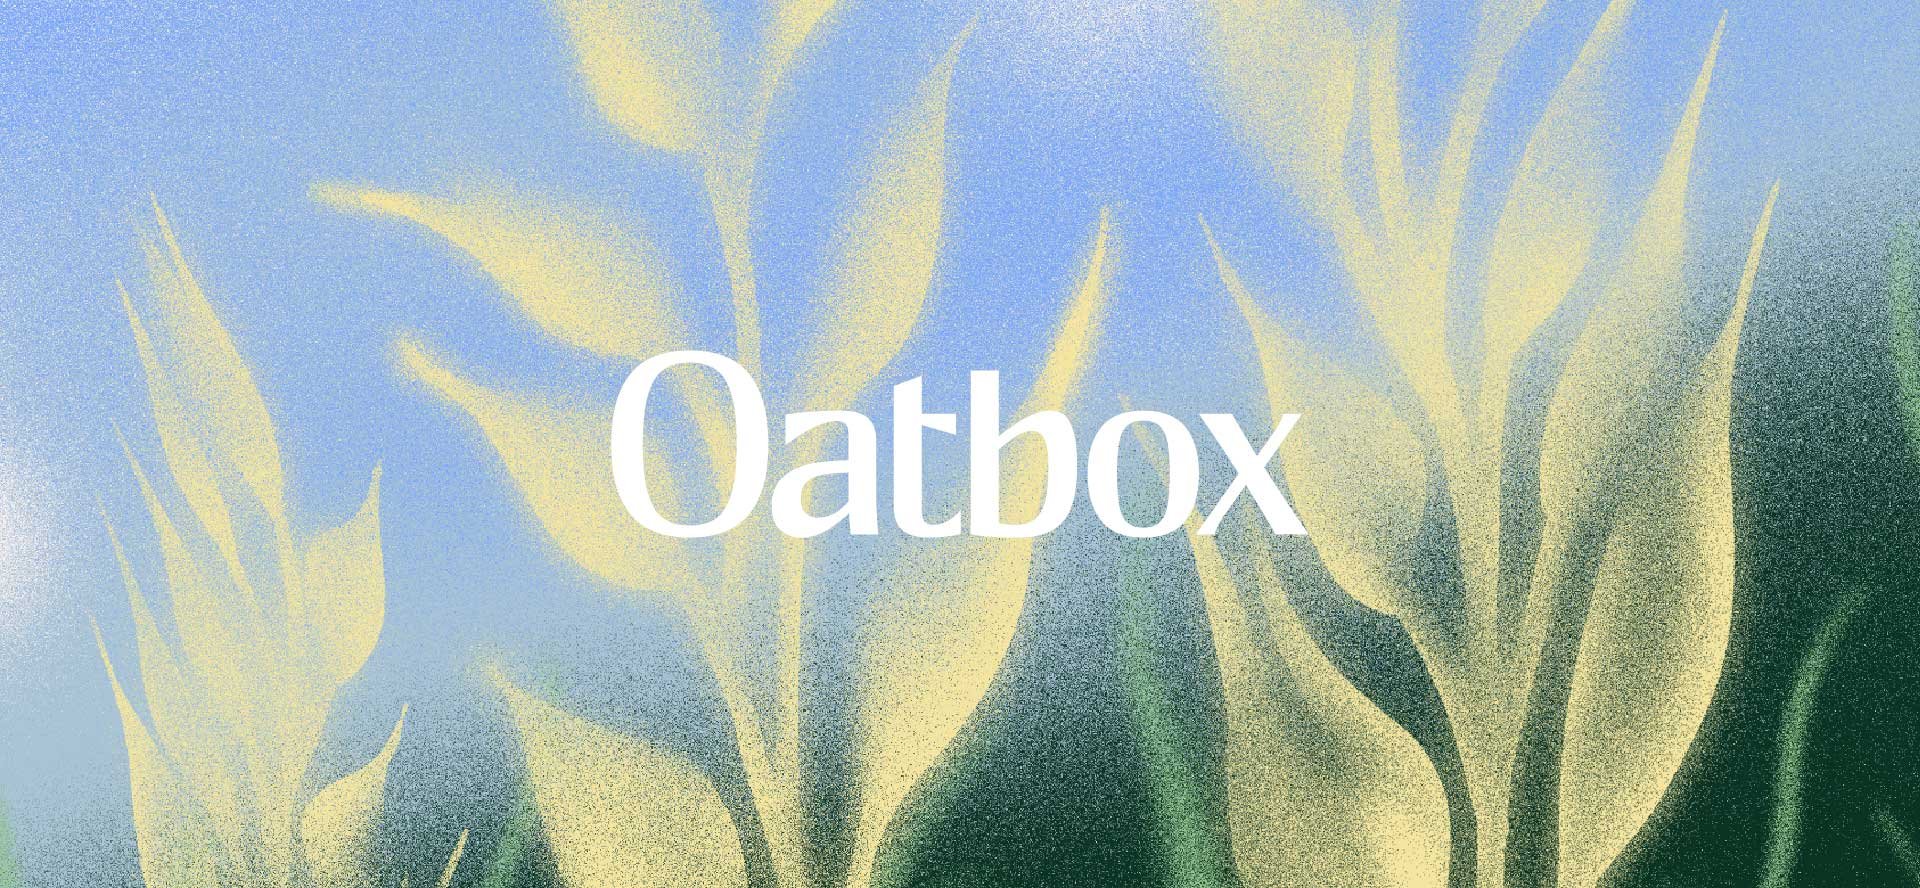 1_oatbox_logo+illu-fr-1637097411.jpg